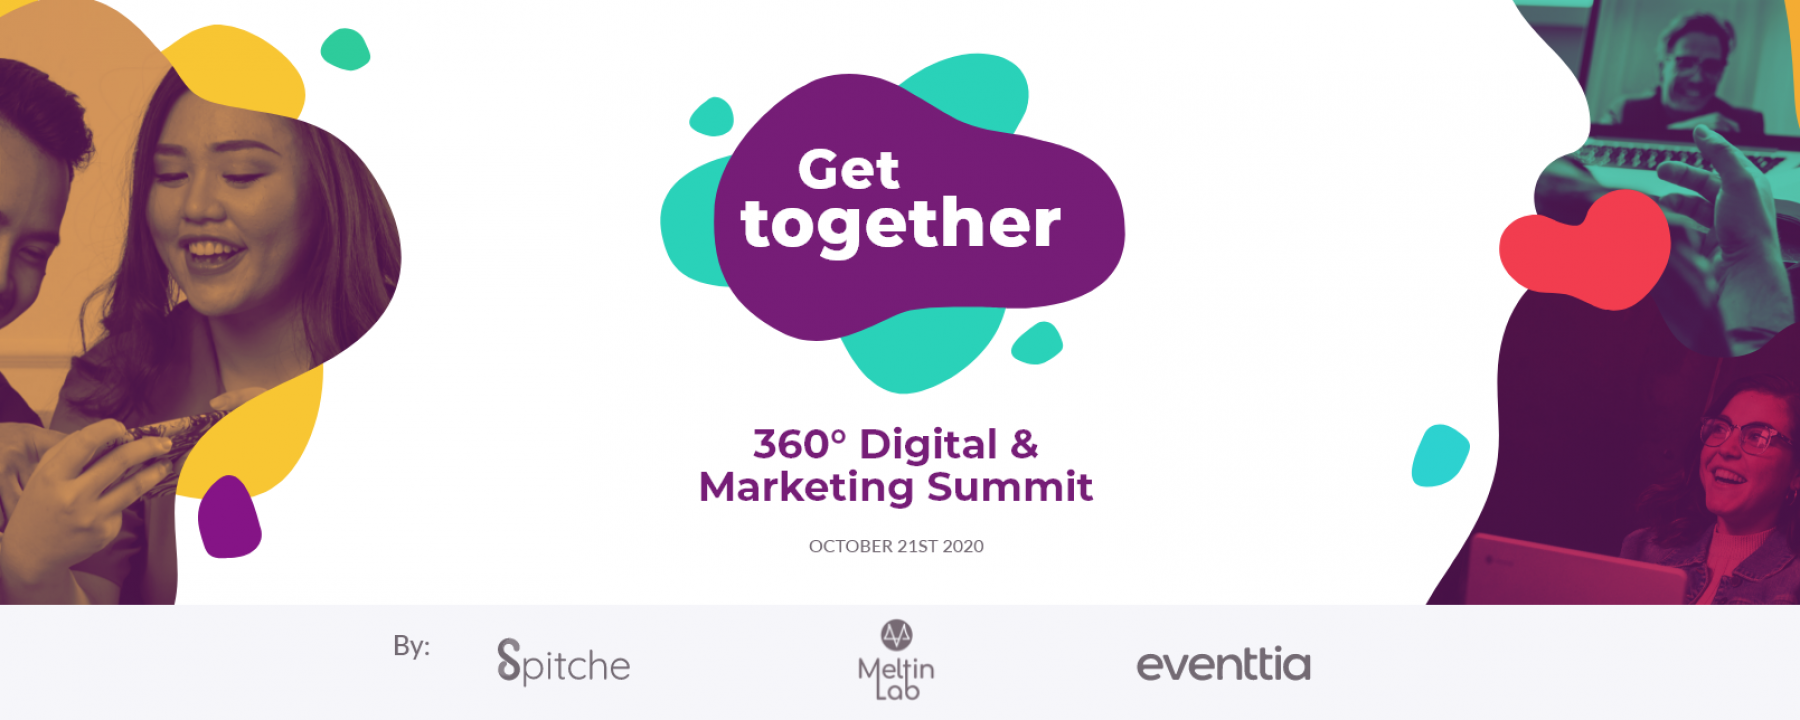 Get Together : 360° Digital & Marketing Summit, organisé par MeltinLab 